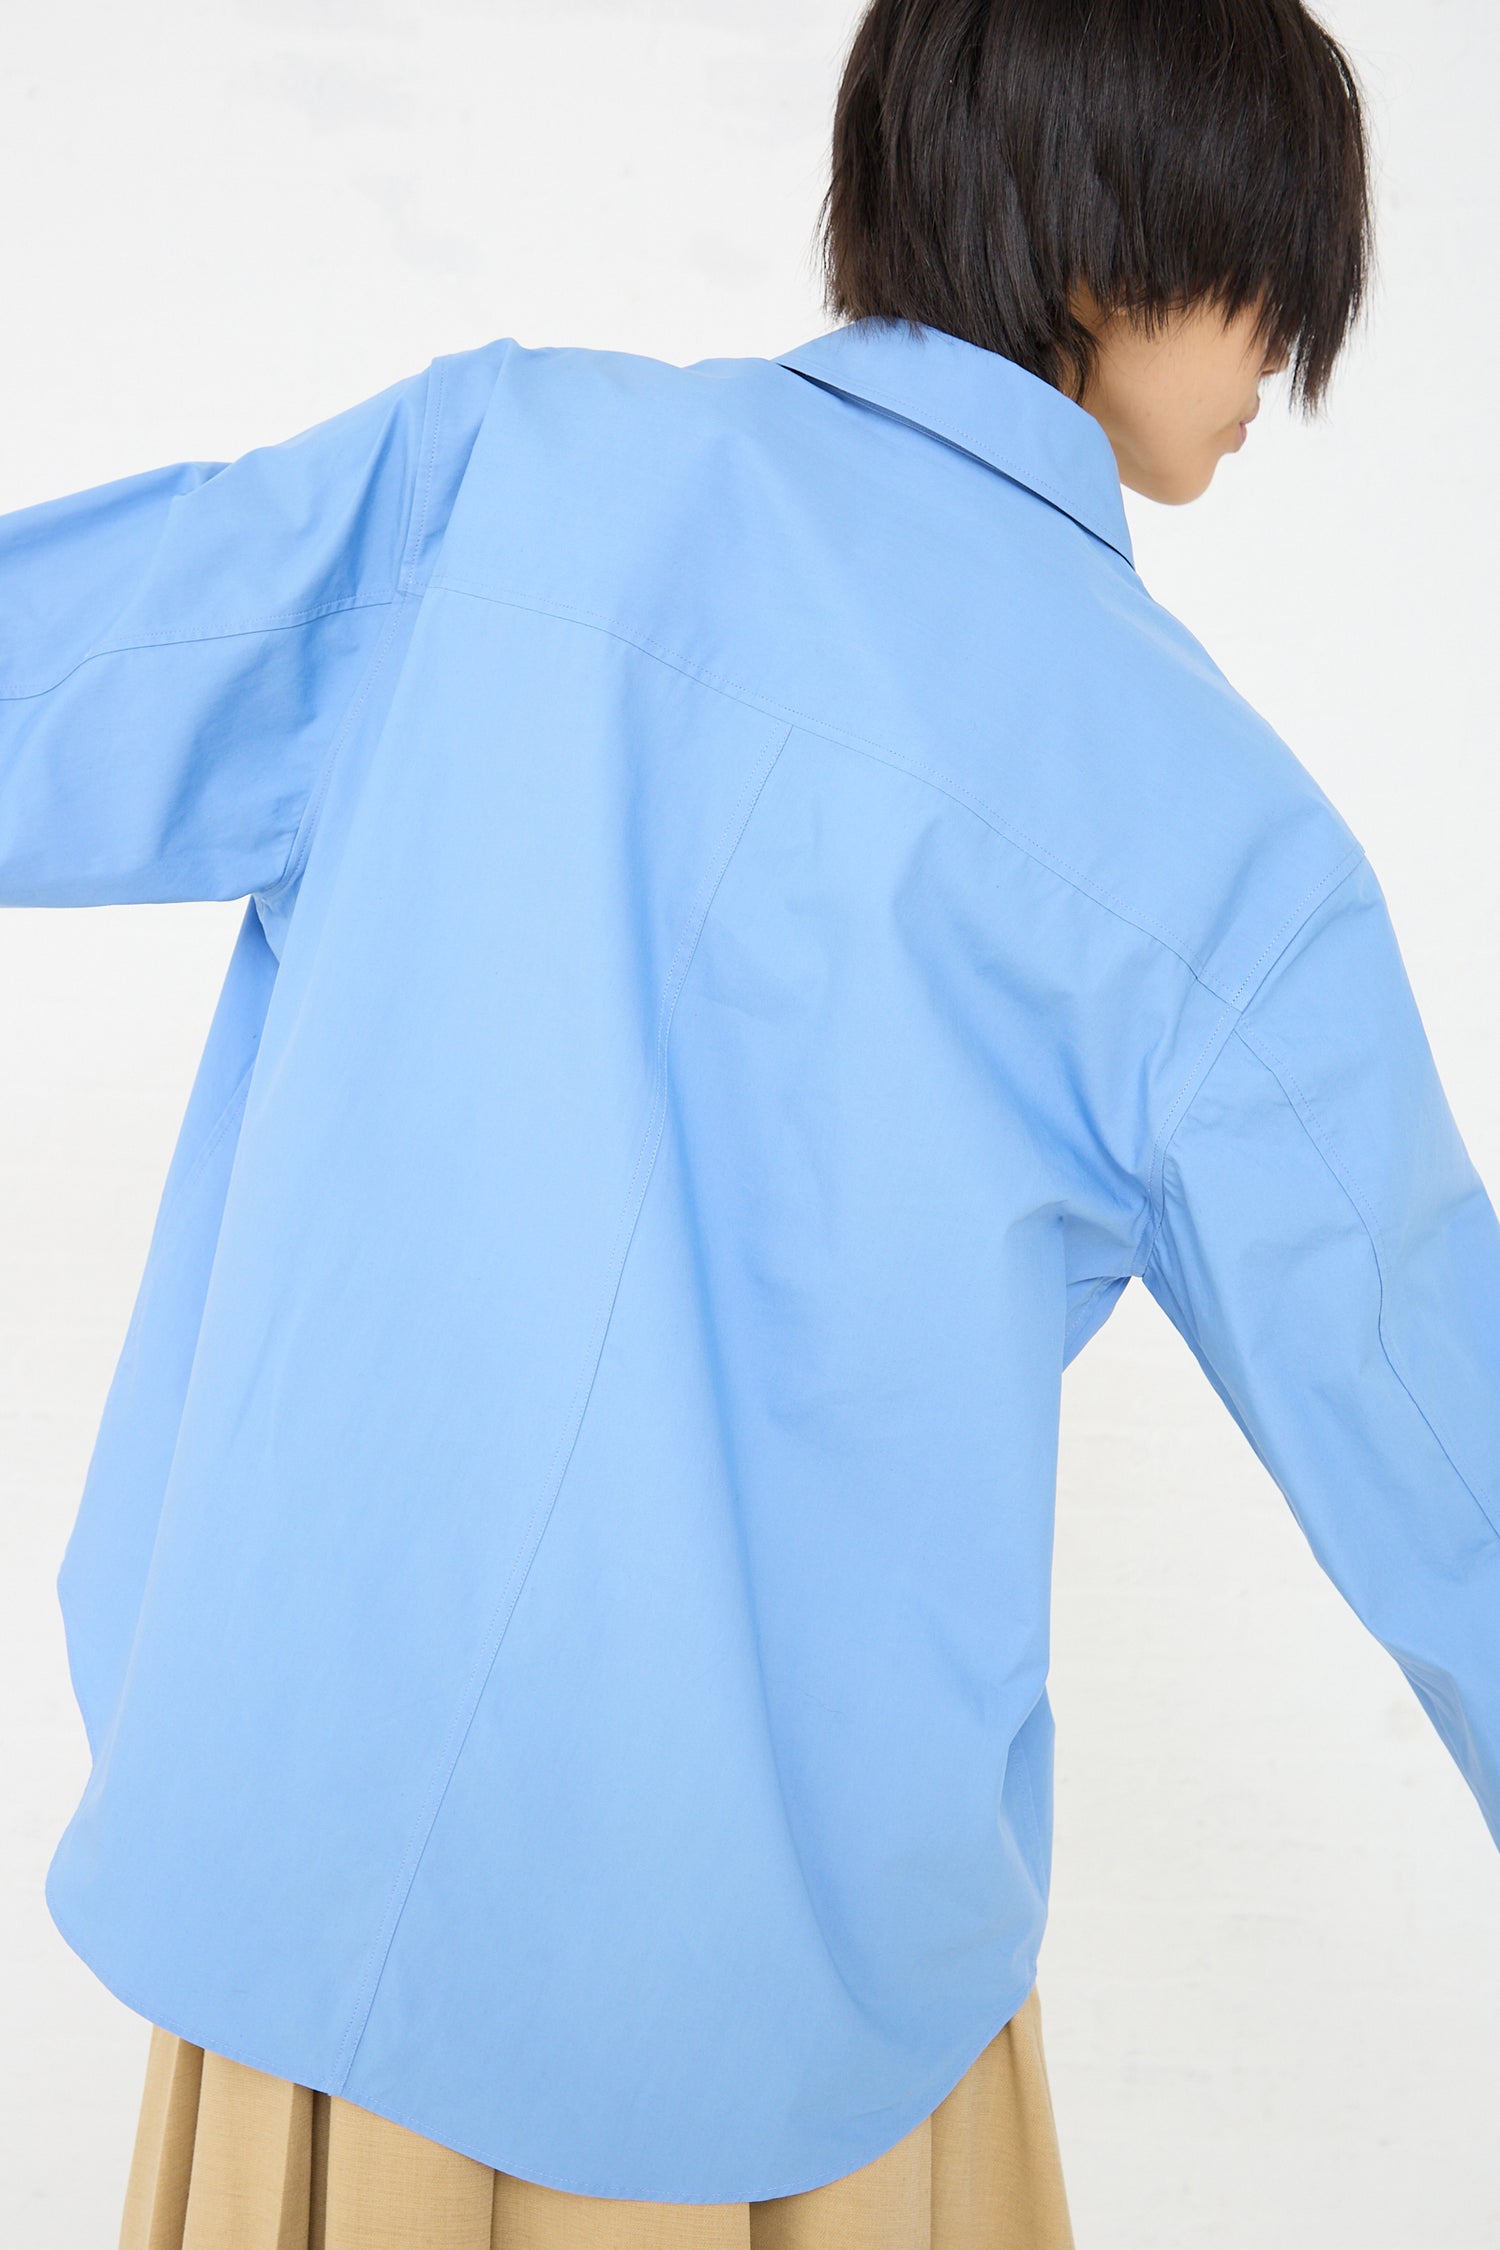 A woman wearing a Rejina Pyo Caprice Shirt in Blue. Back view.